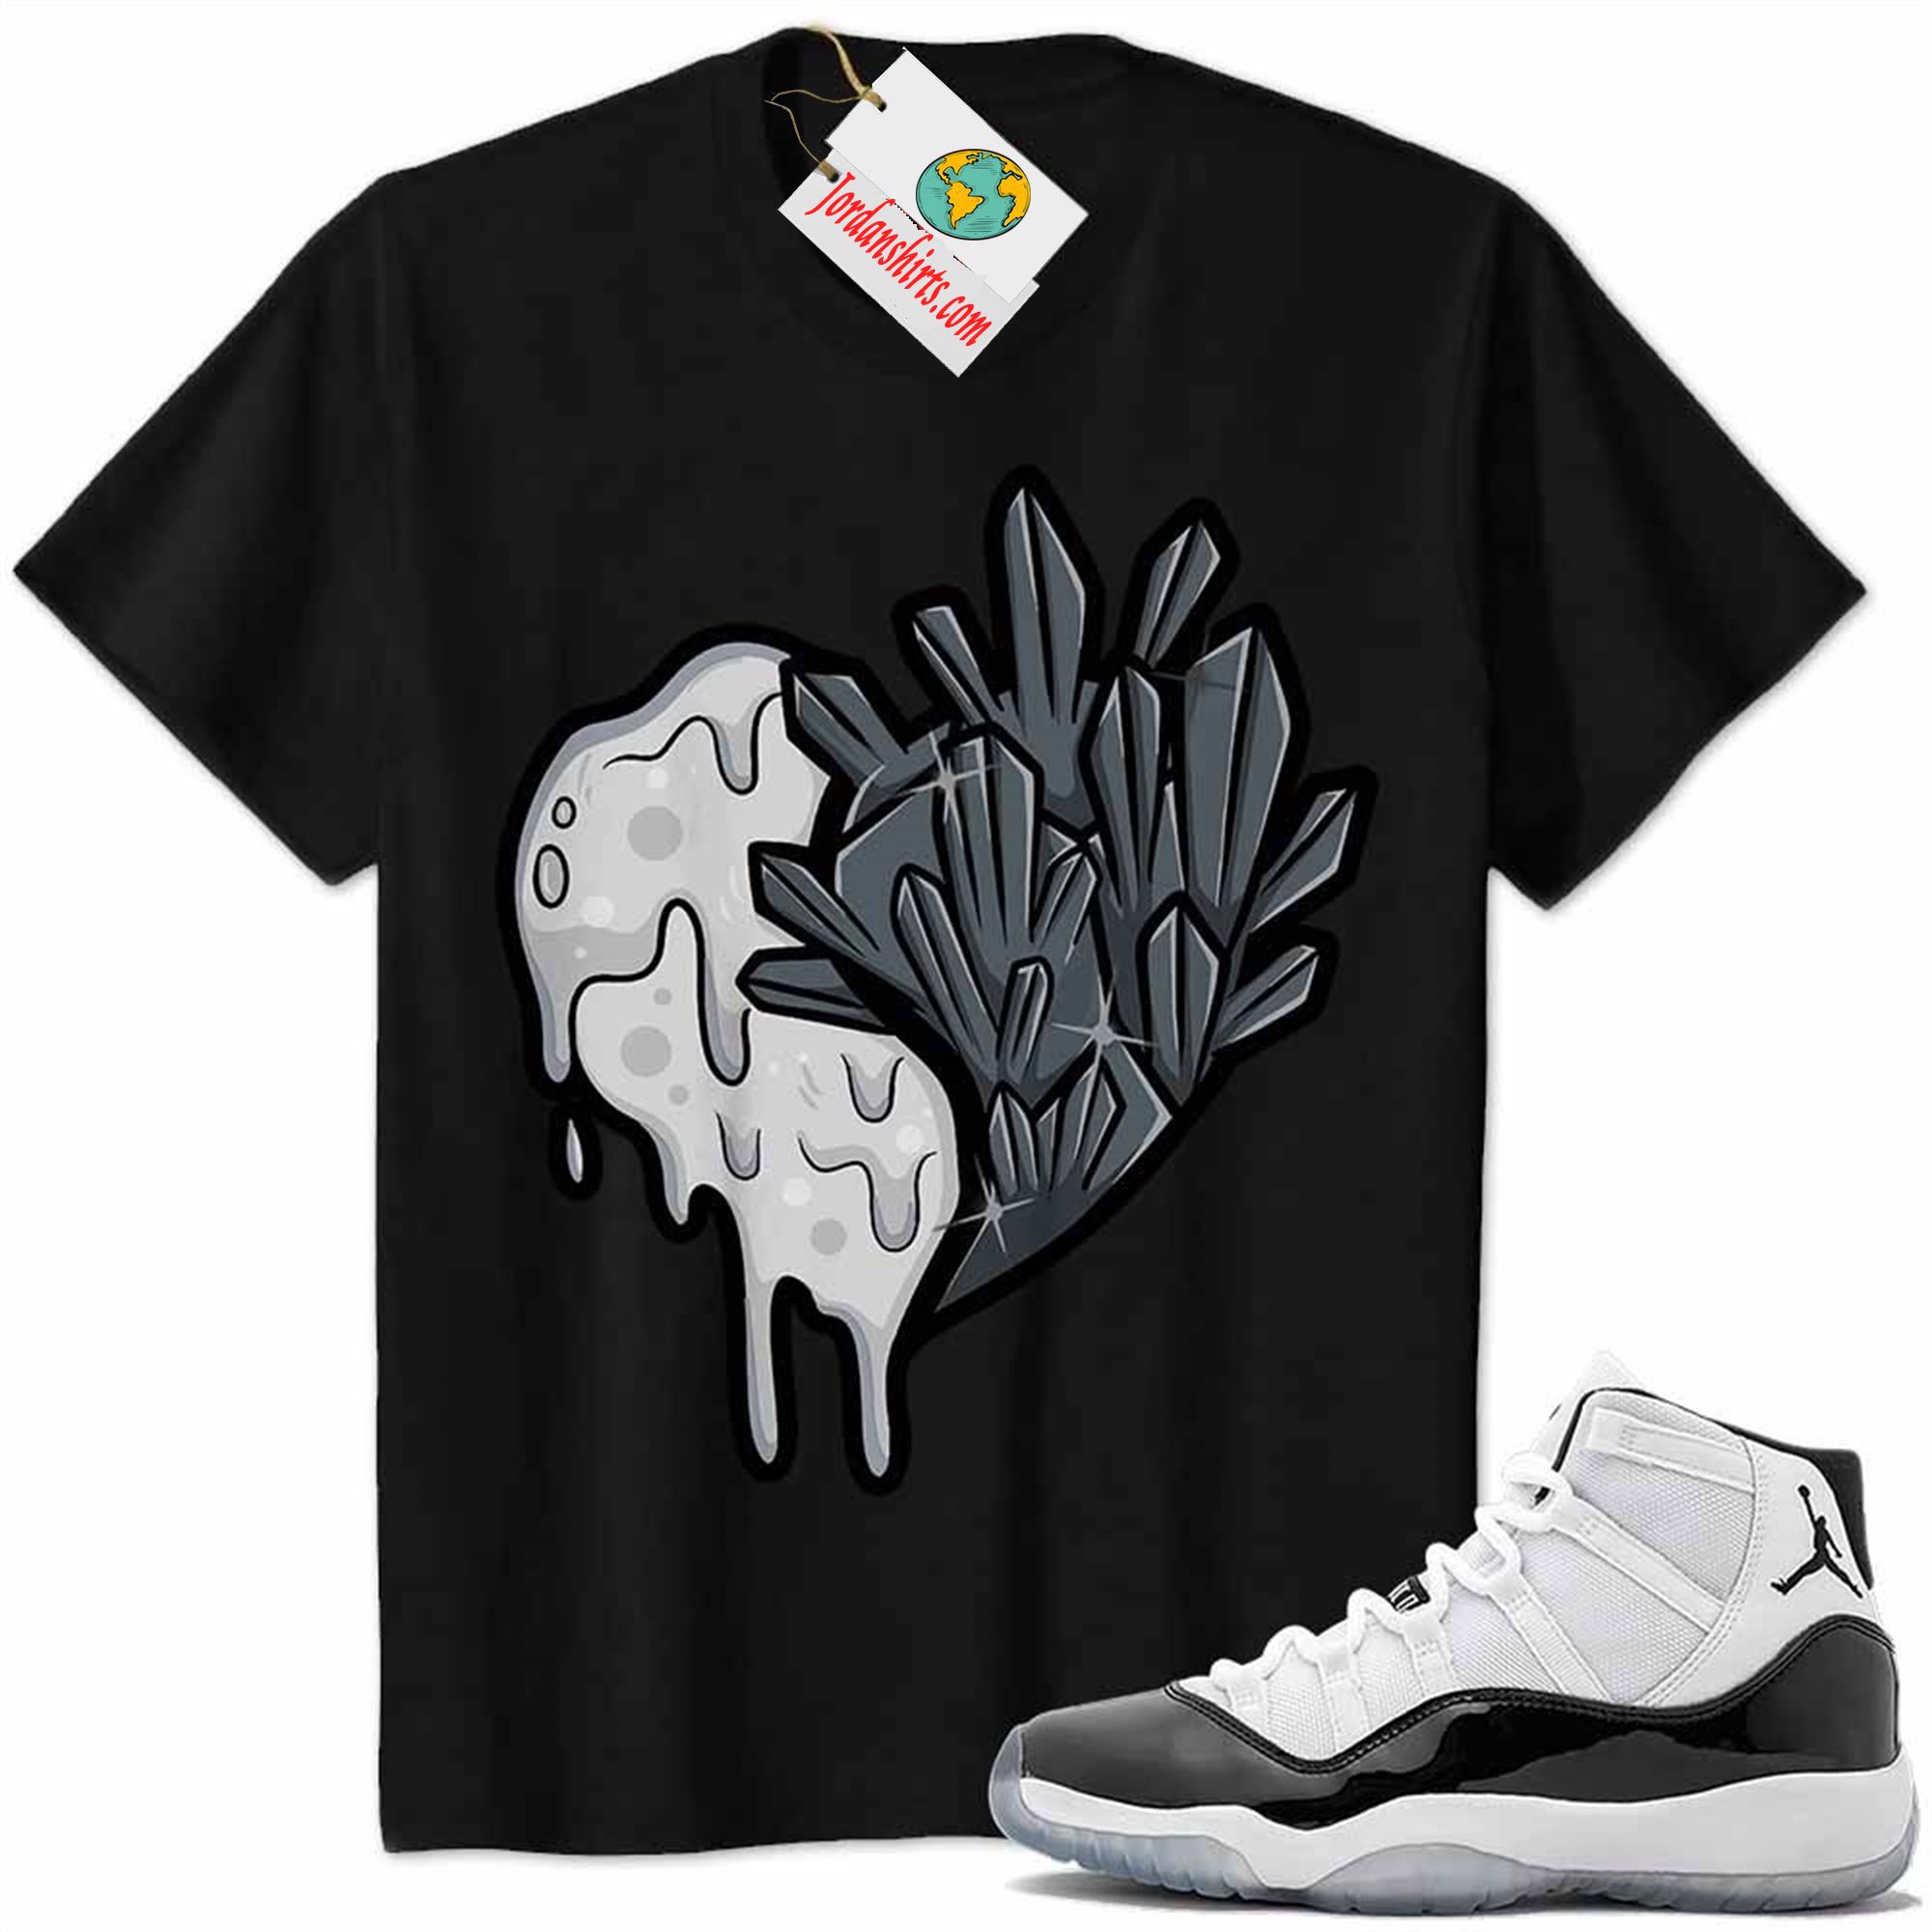 Jordan 11 Shirt, Crystal And Melt Heart Black Air Jordan 11 Concord 11s Full Size Up To 5xl